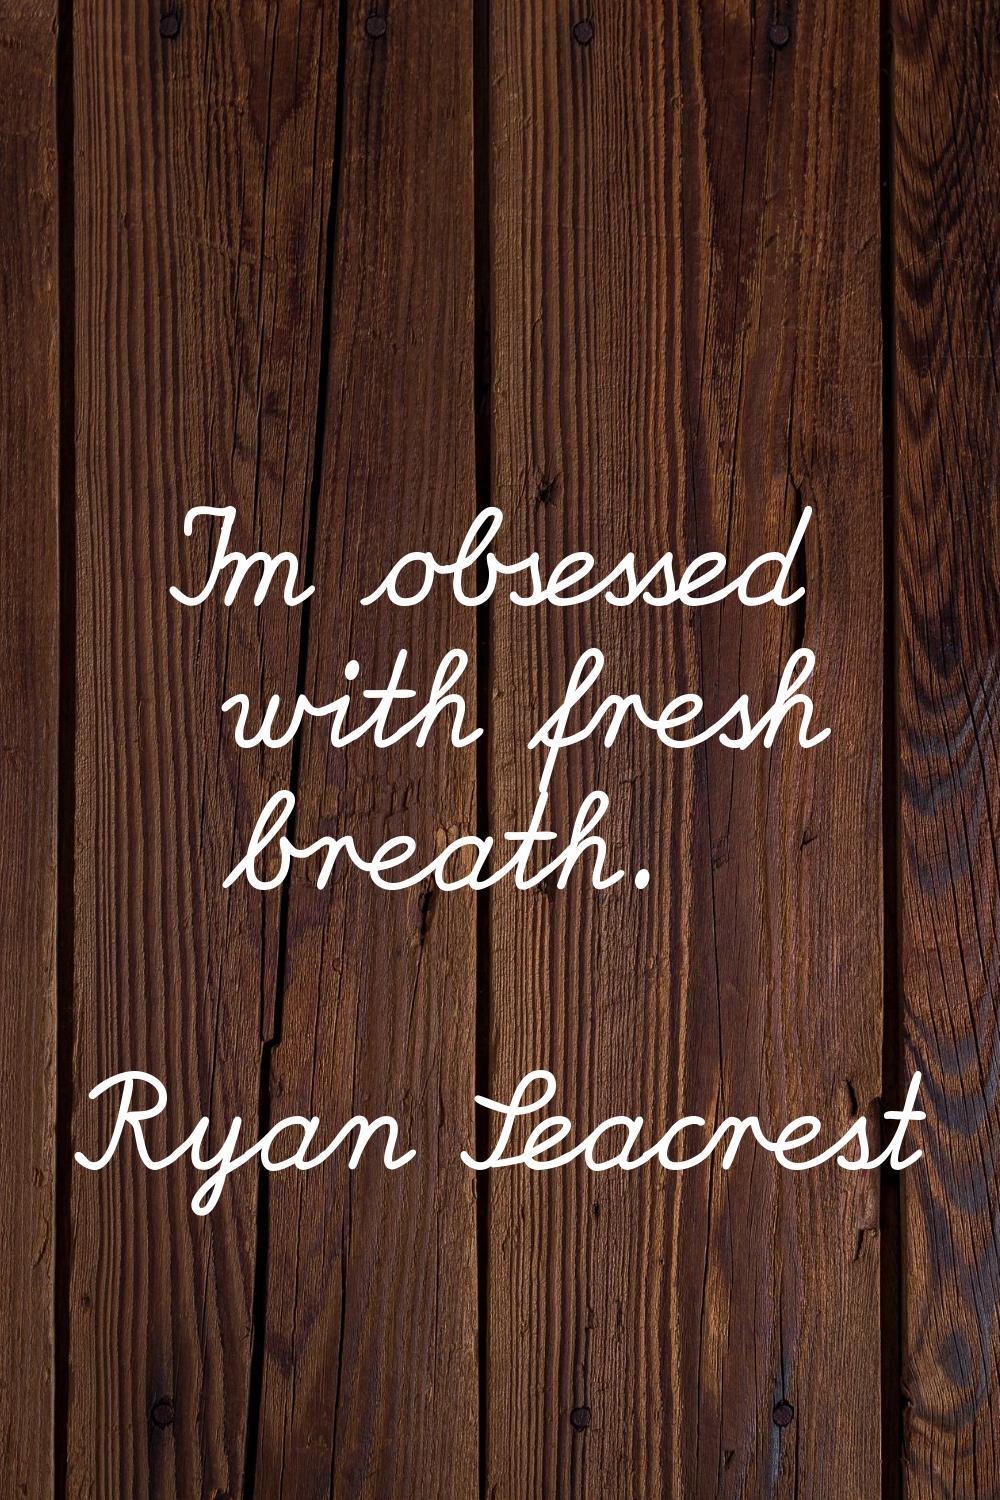 I'm obsessed with fresh breath.